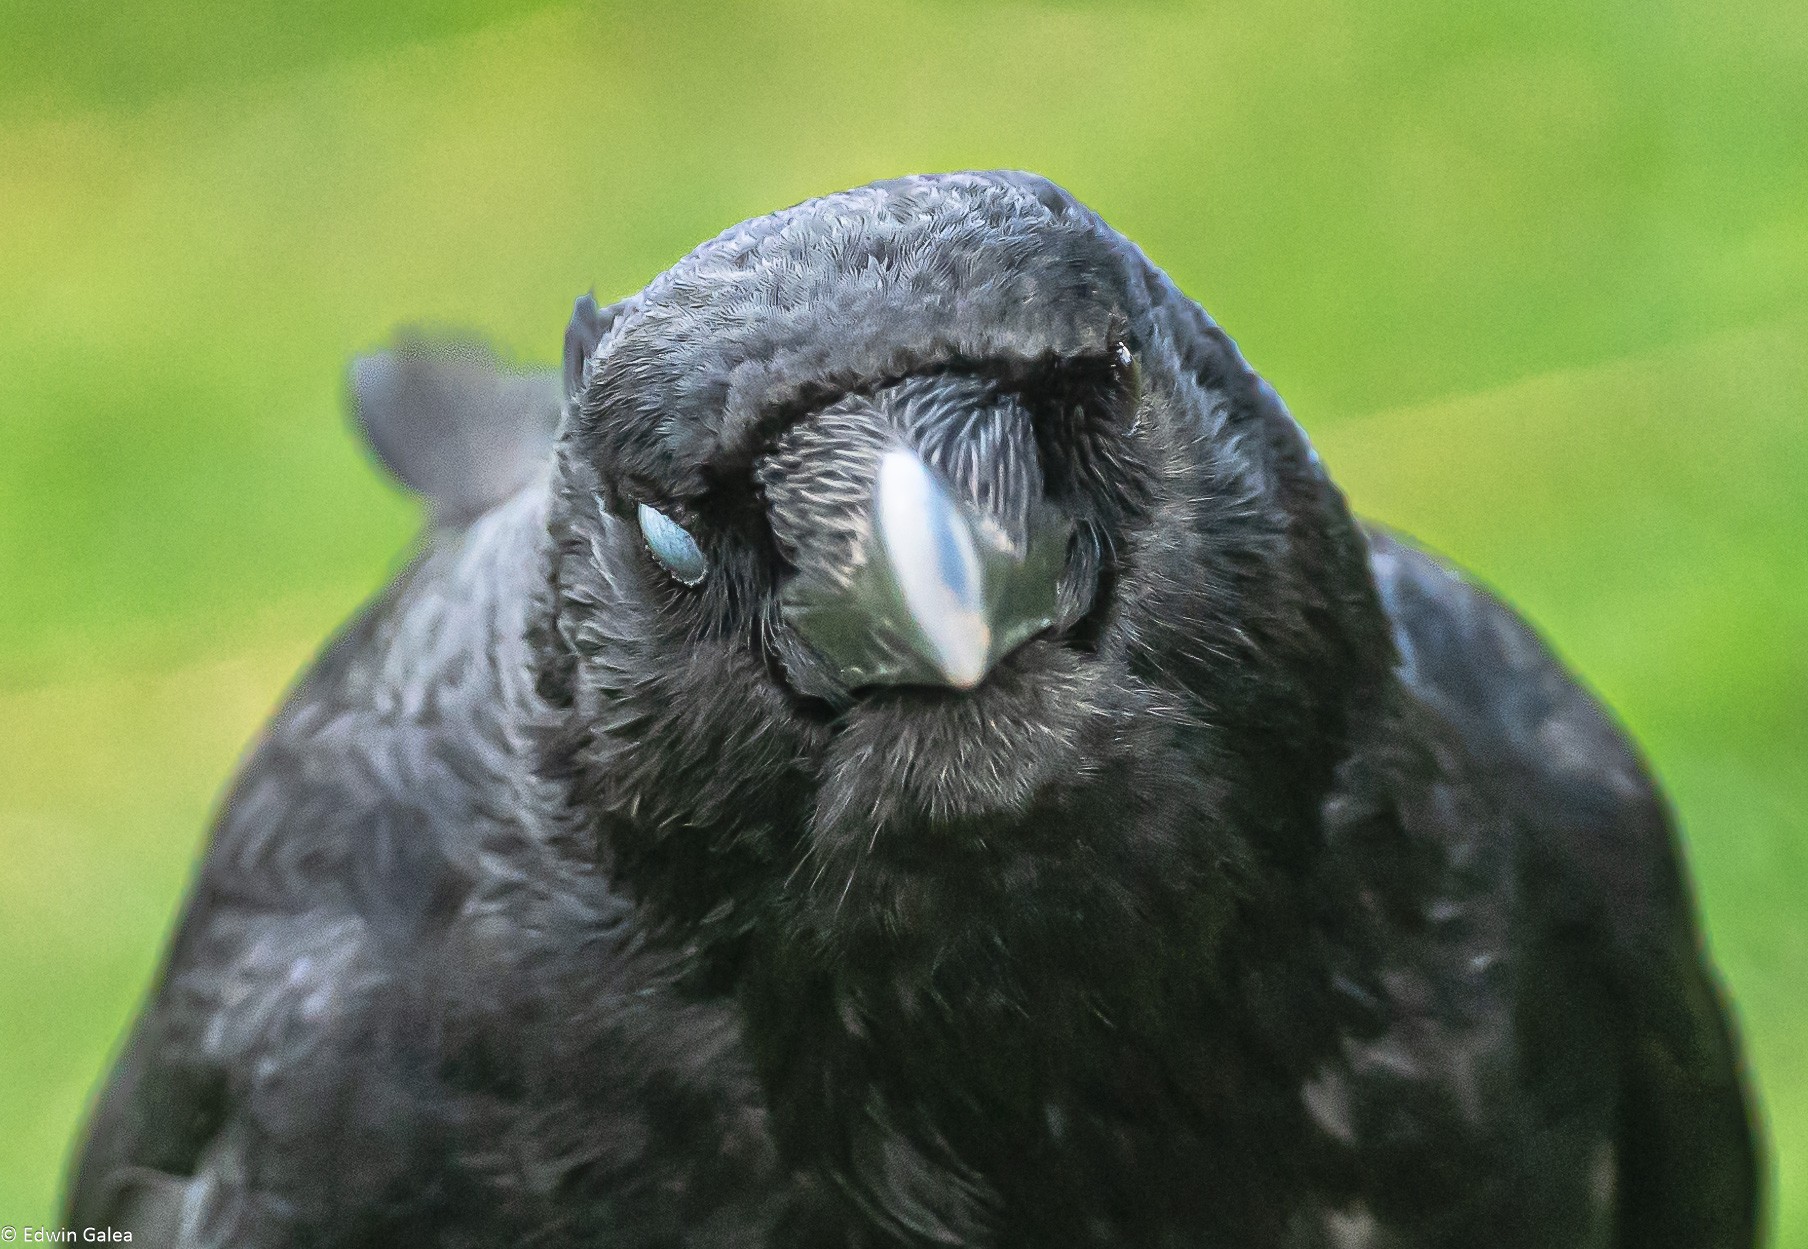 crow_face_on_attitude-2.jpg